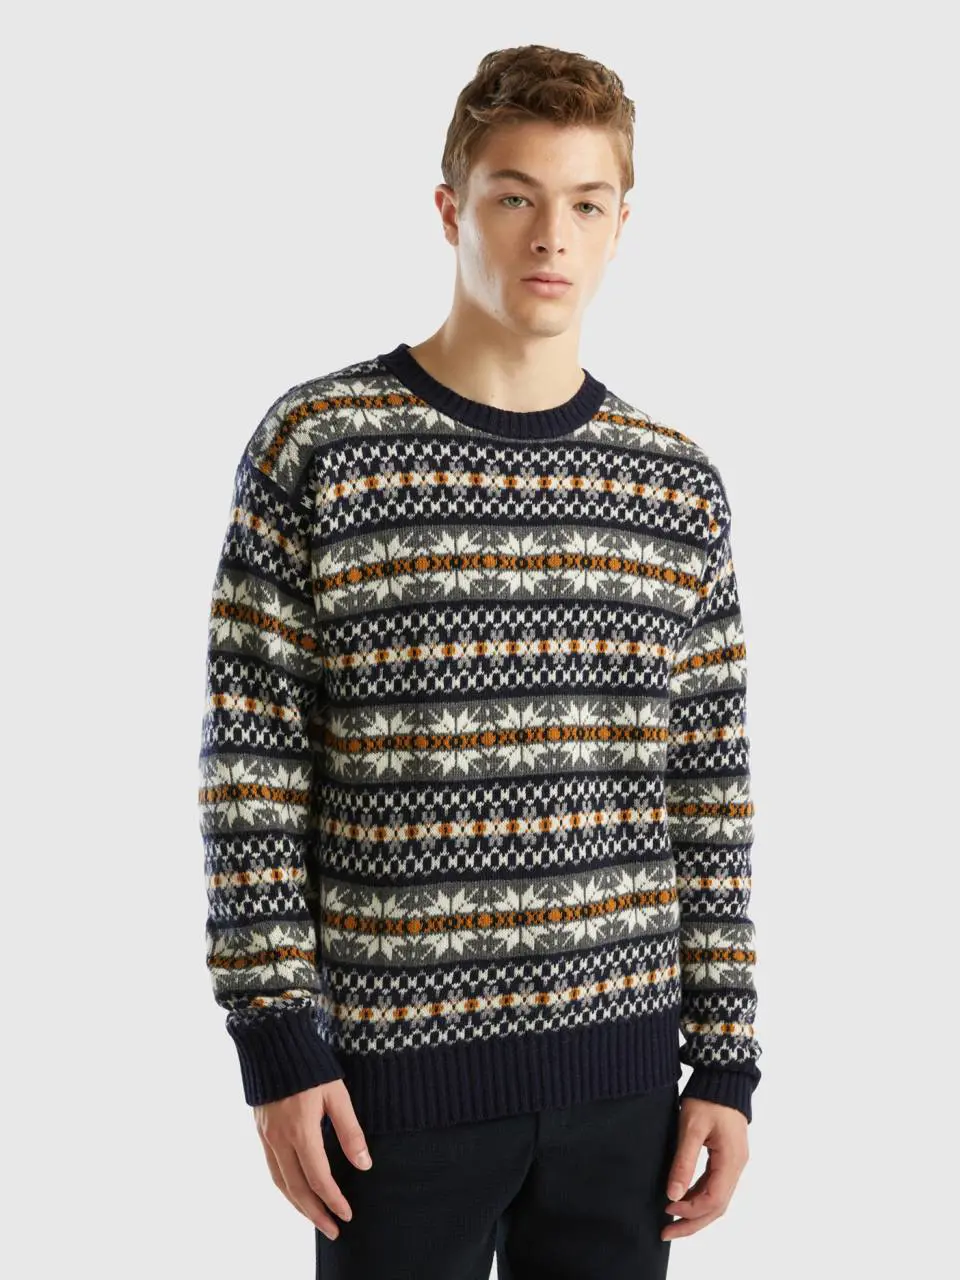 Benetton jacquard sweater in wool blend. 1